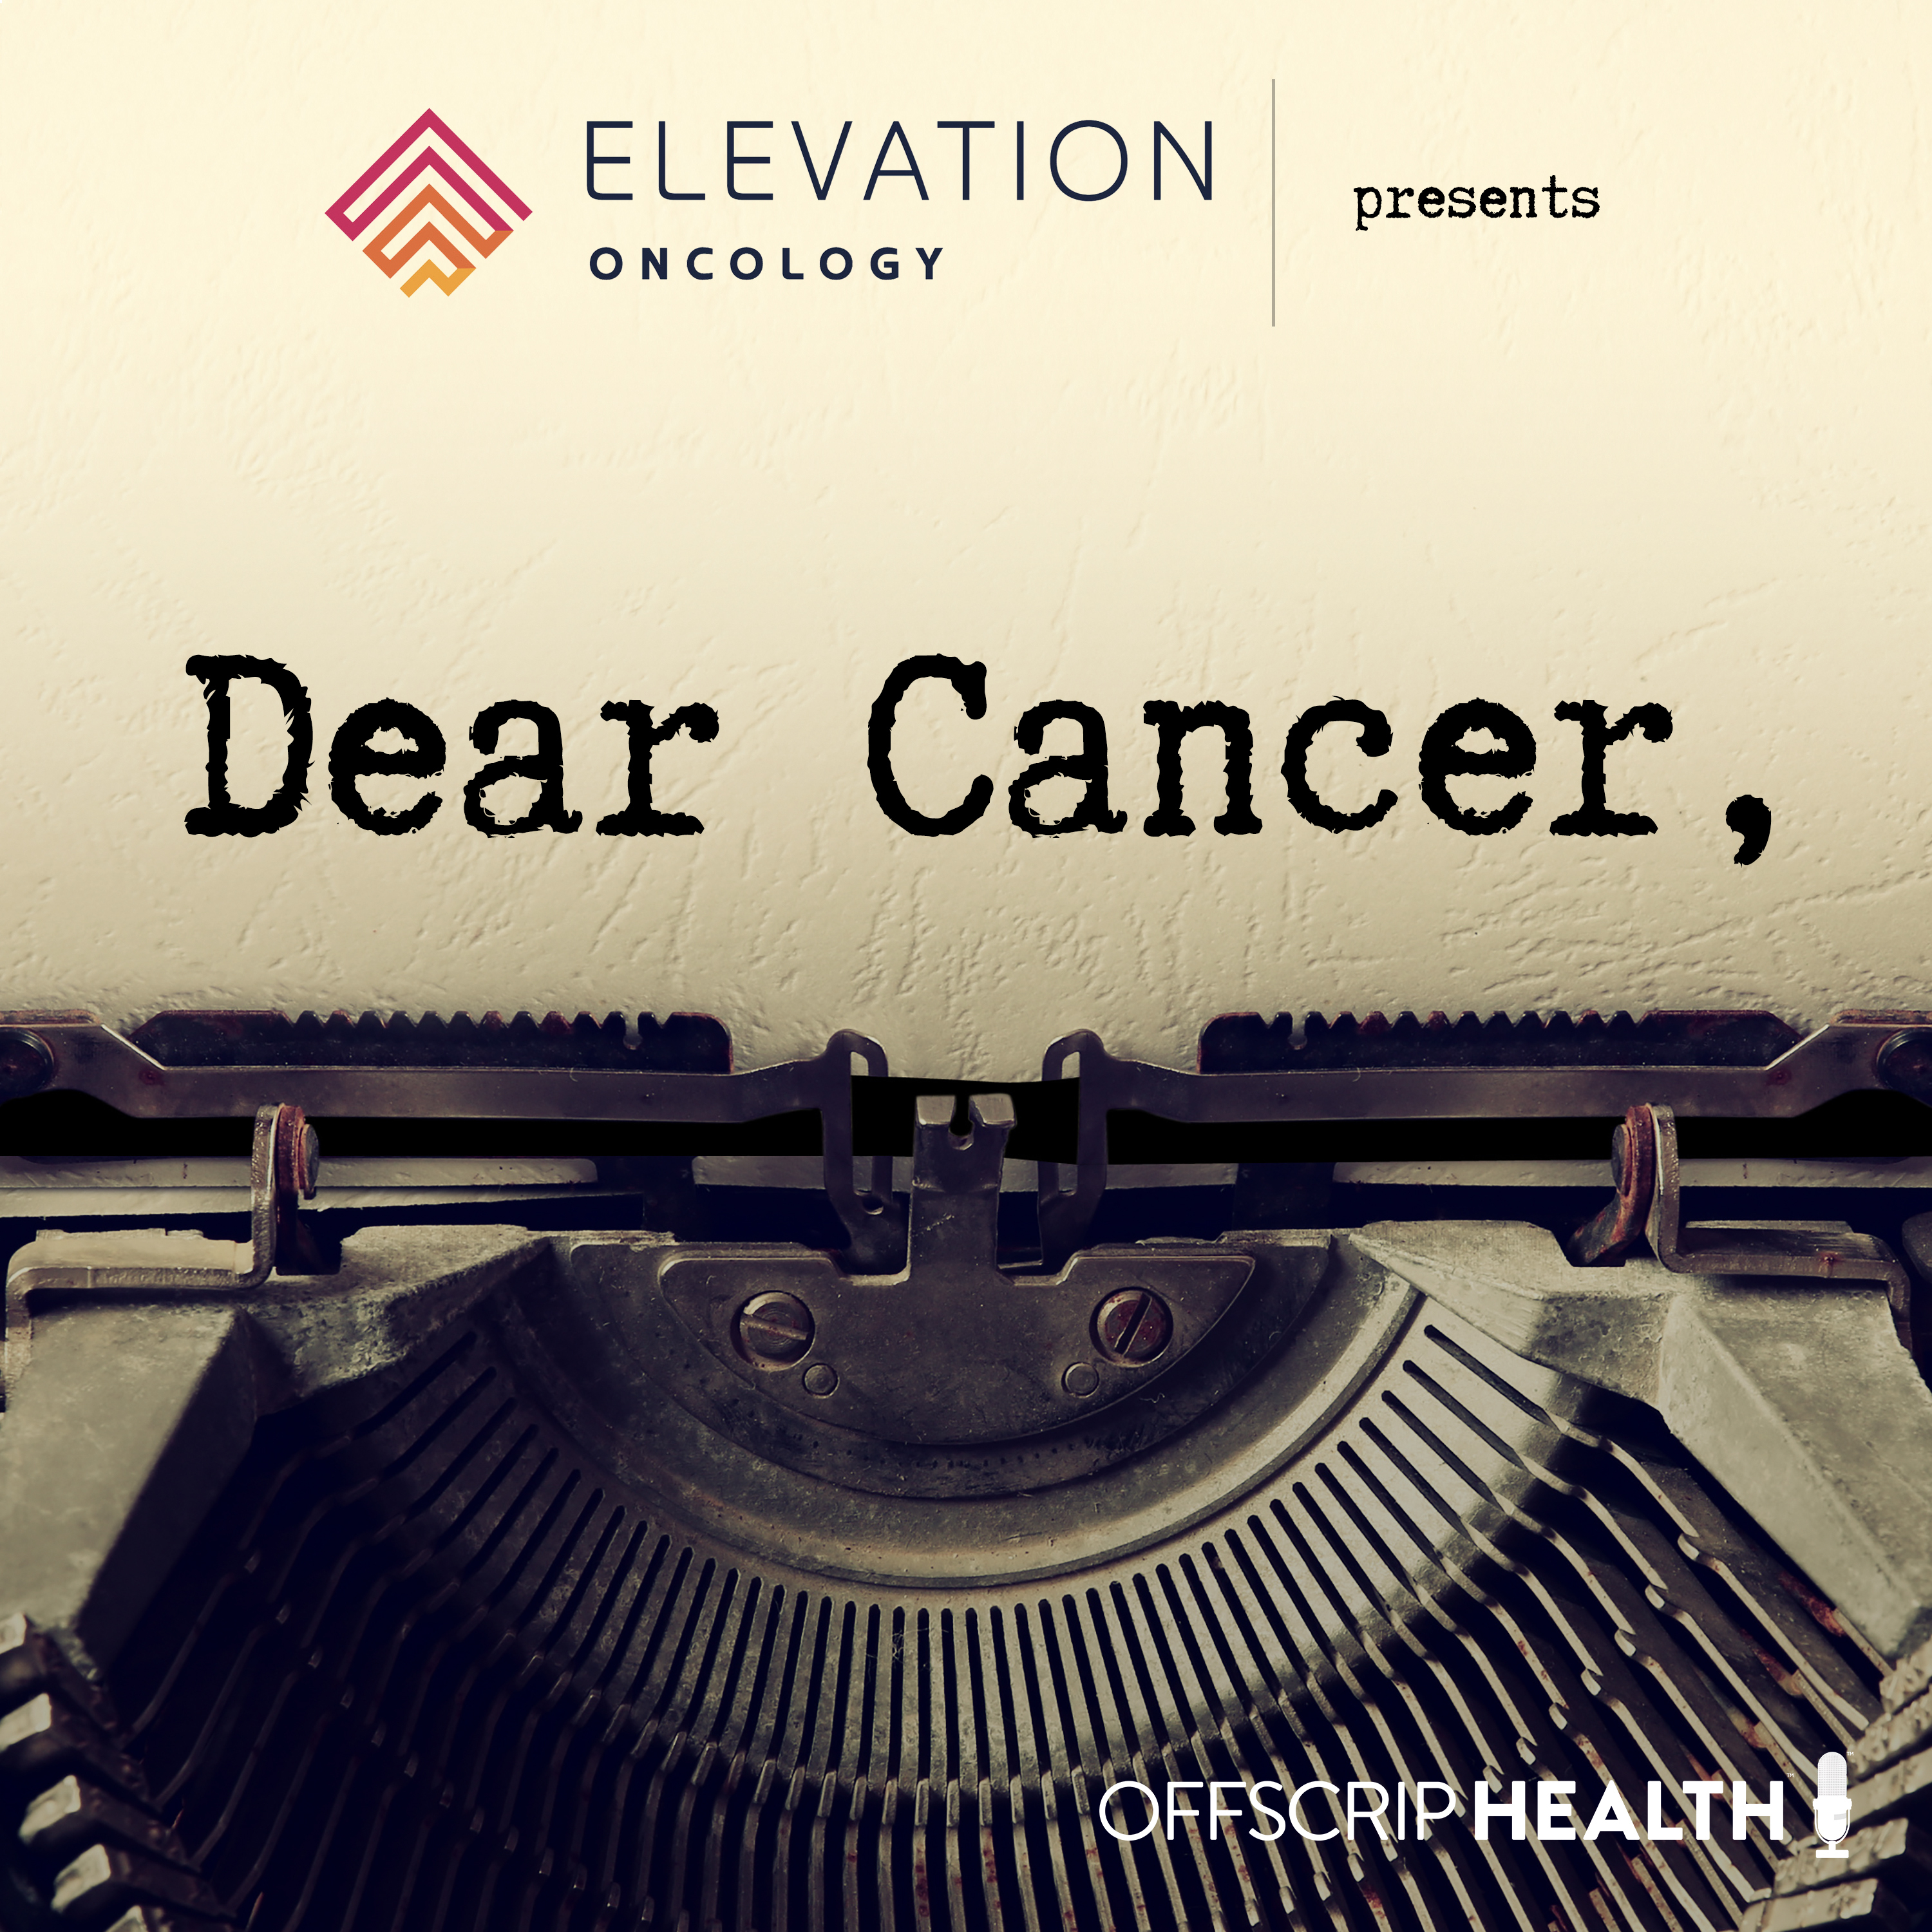 [BONUS] Dear Cancer: What Is Biomarker Testing?